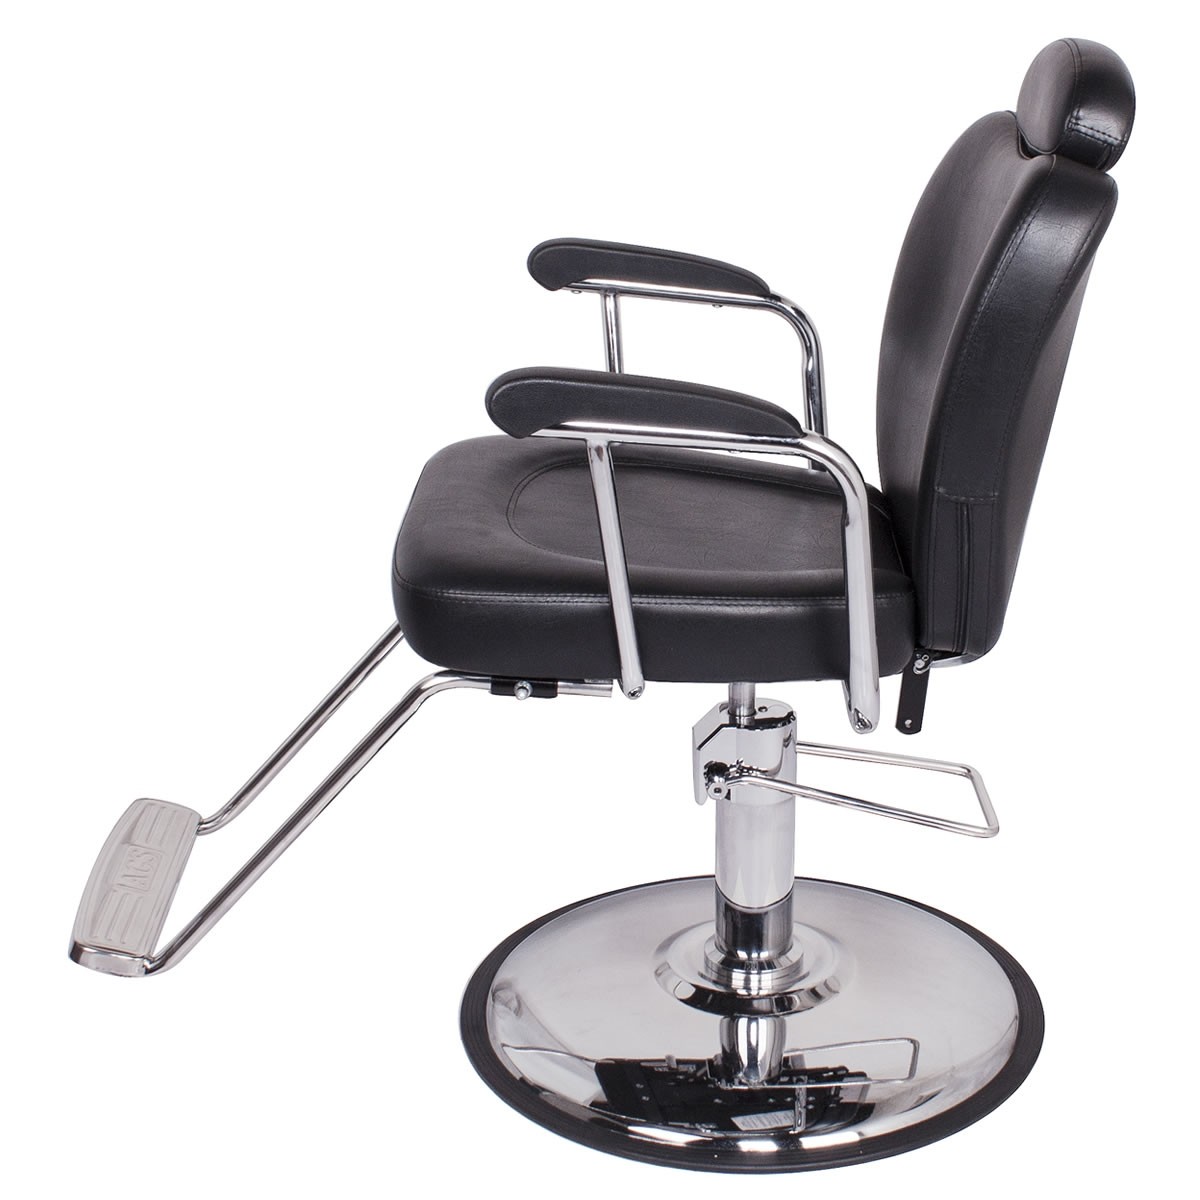 "DALLAS" Reclining All-Purpose Salon Chair, All Purpose Styling Chair